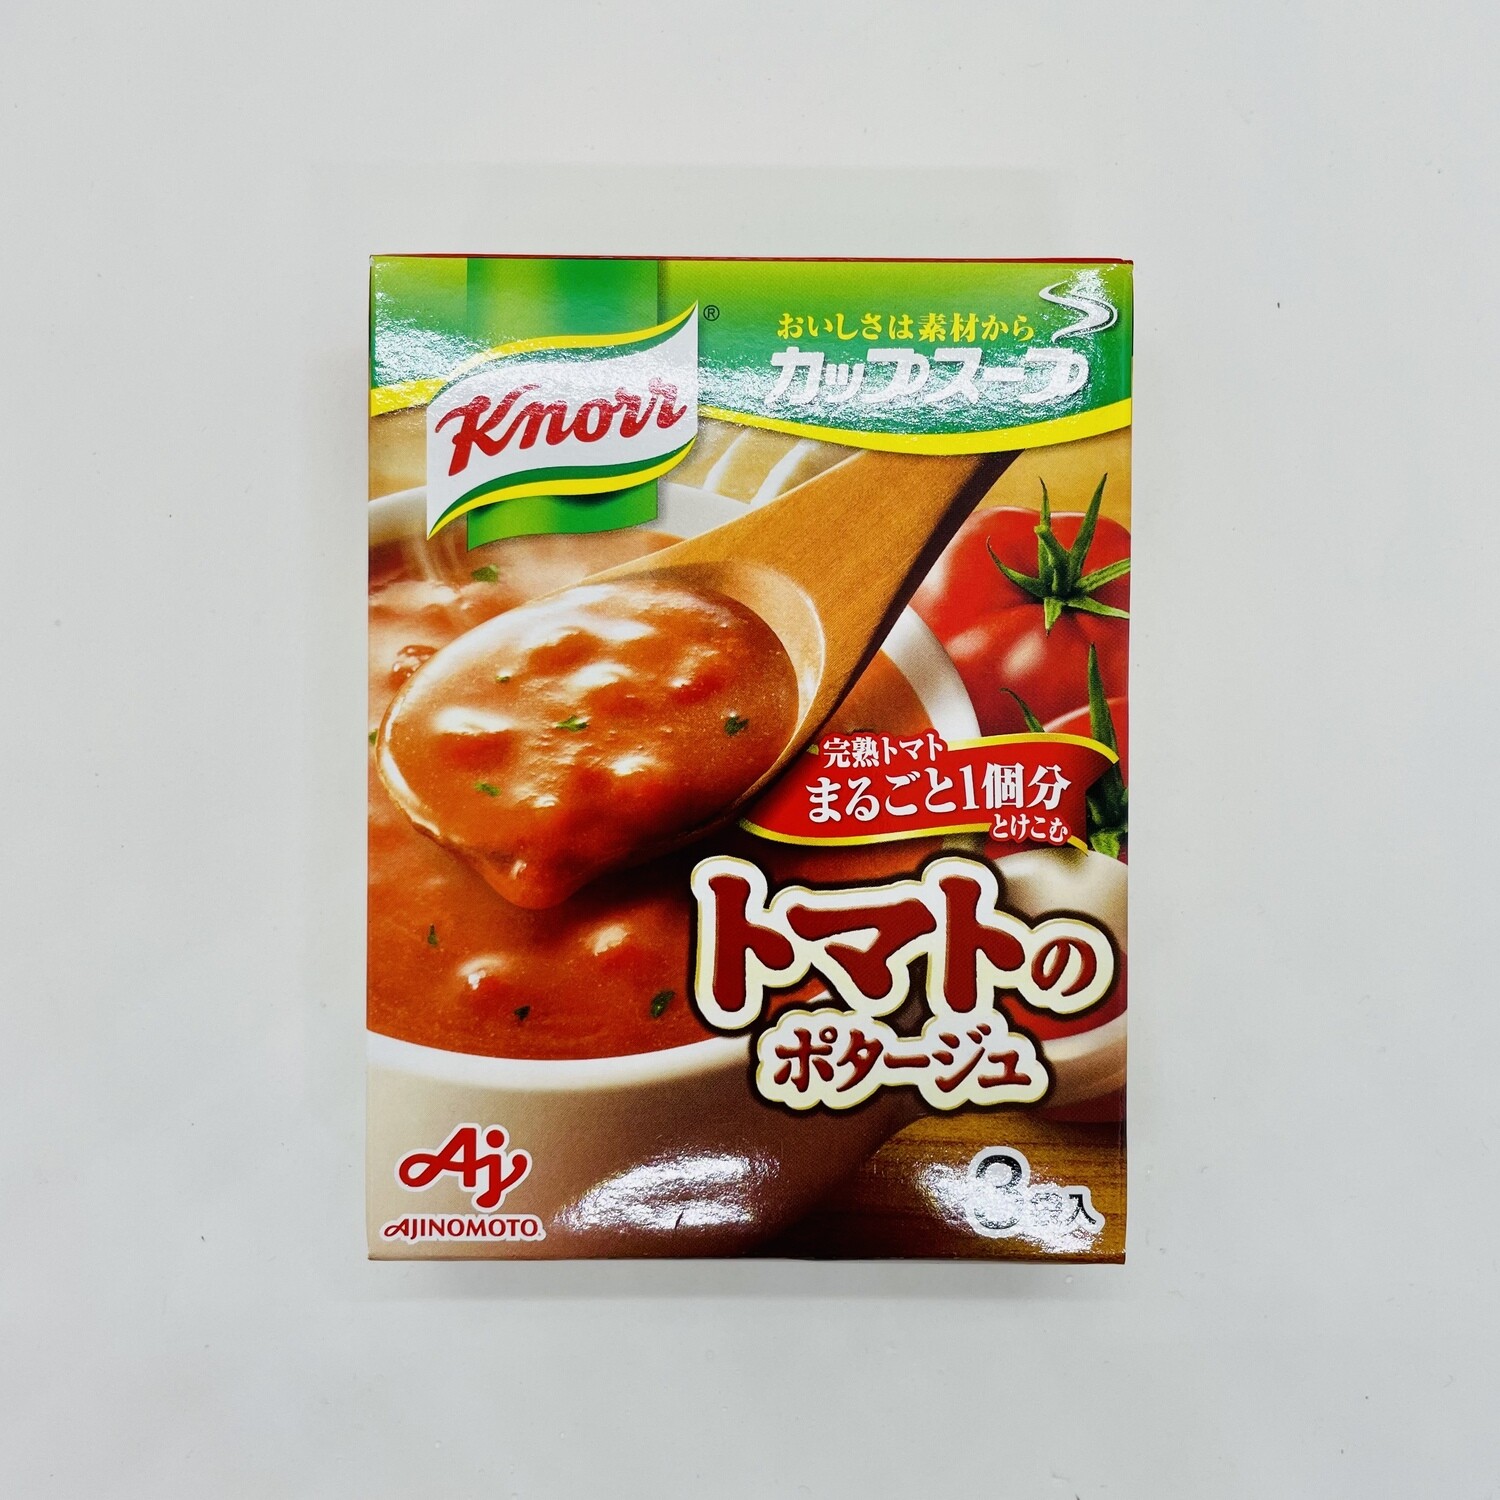 Knorr Tomato Potage Soup